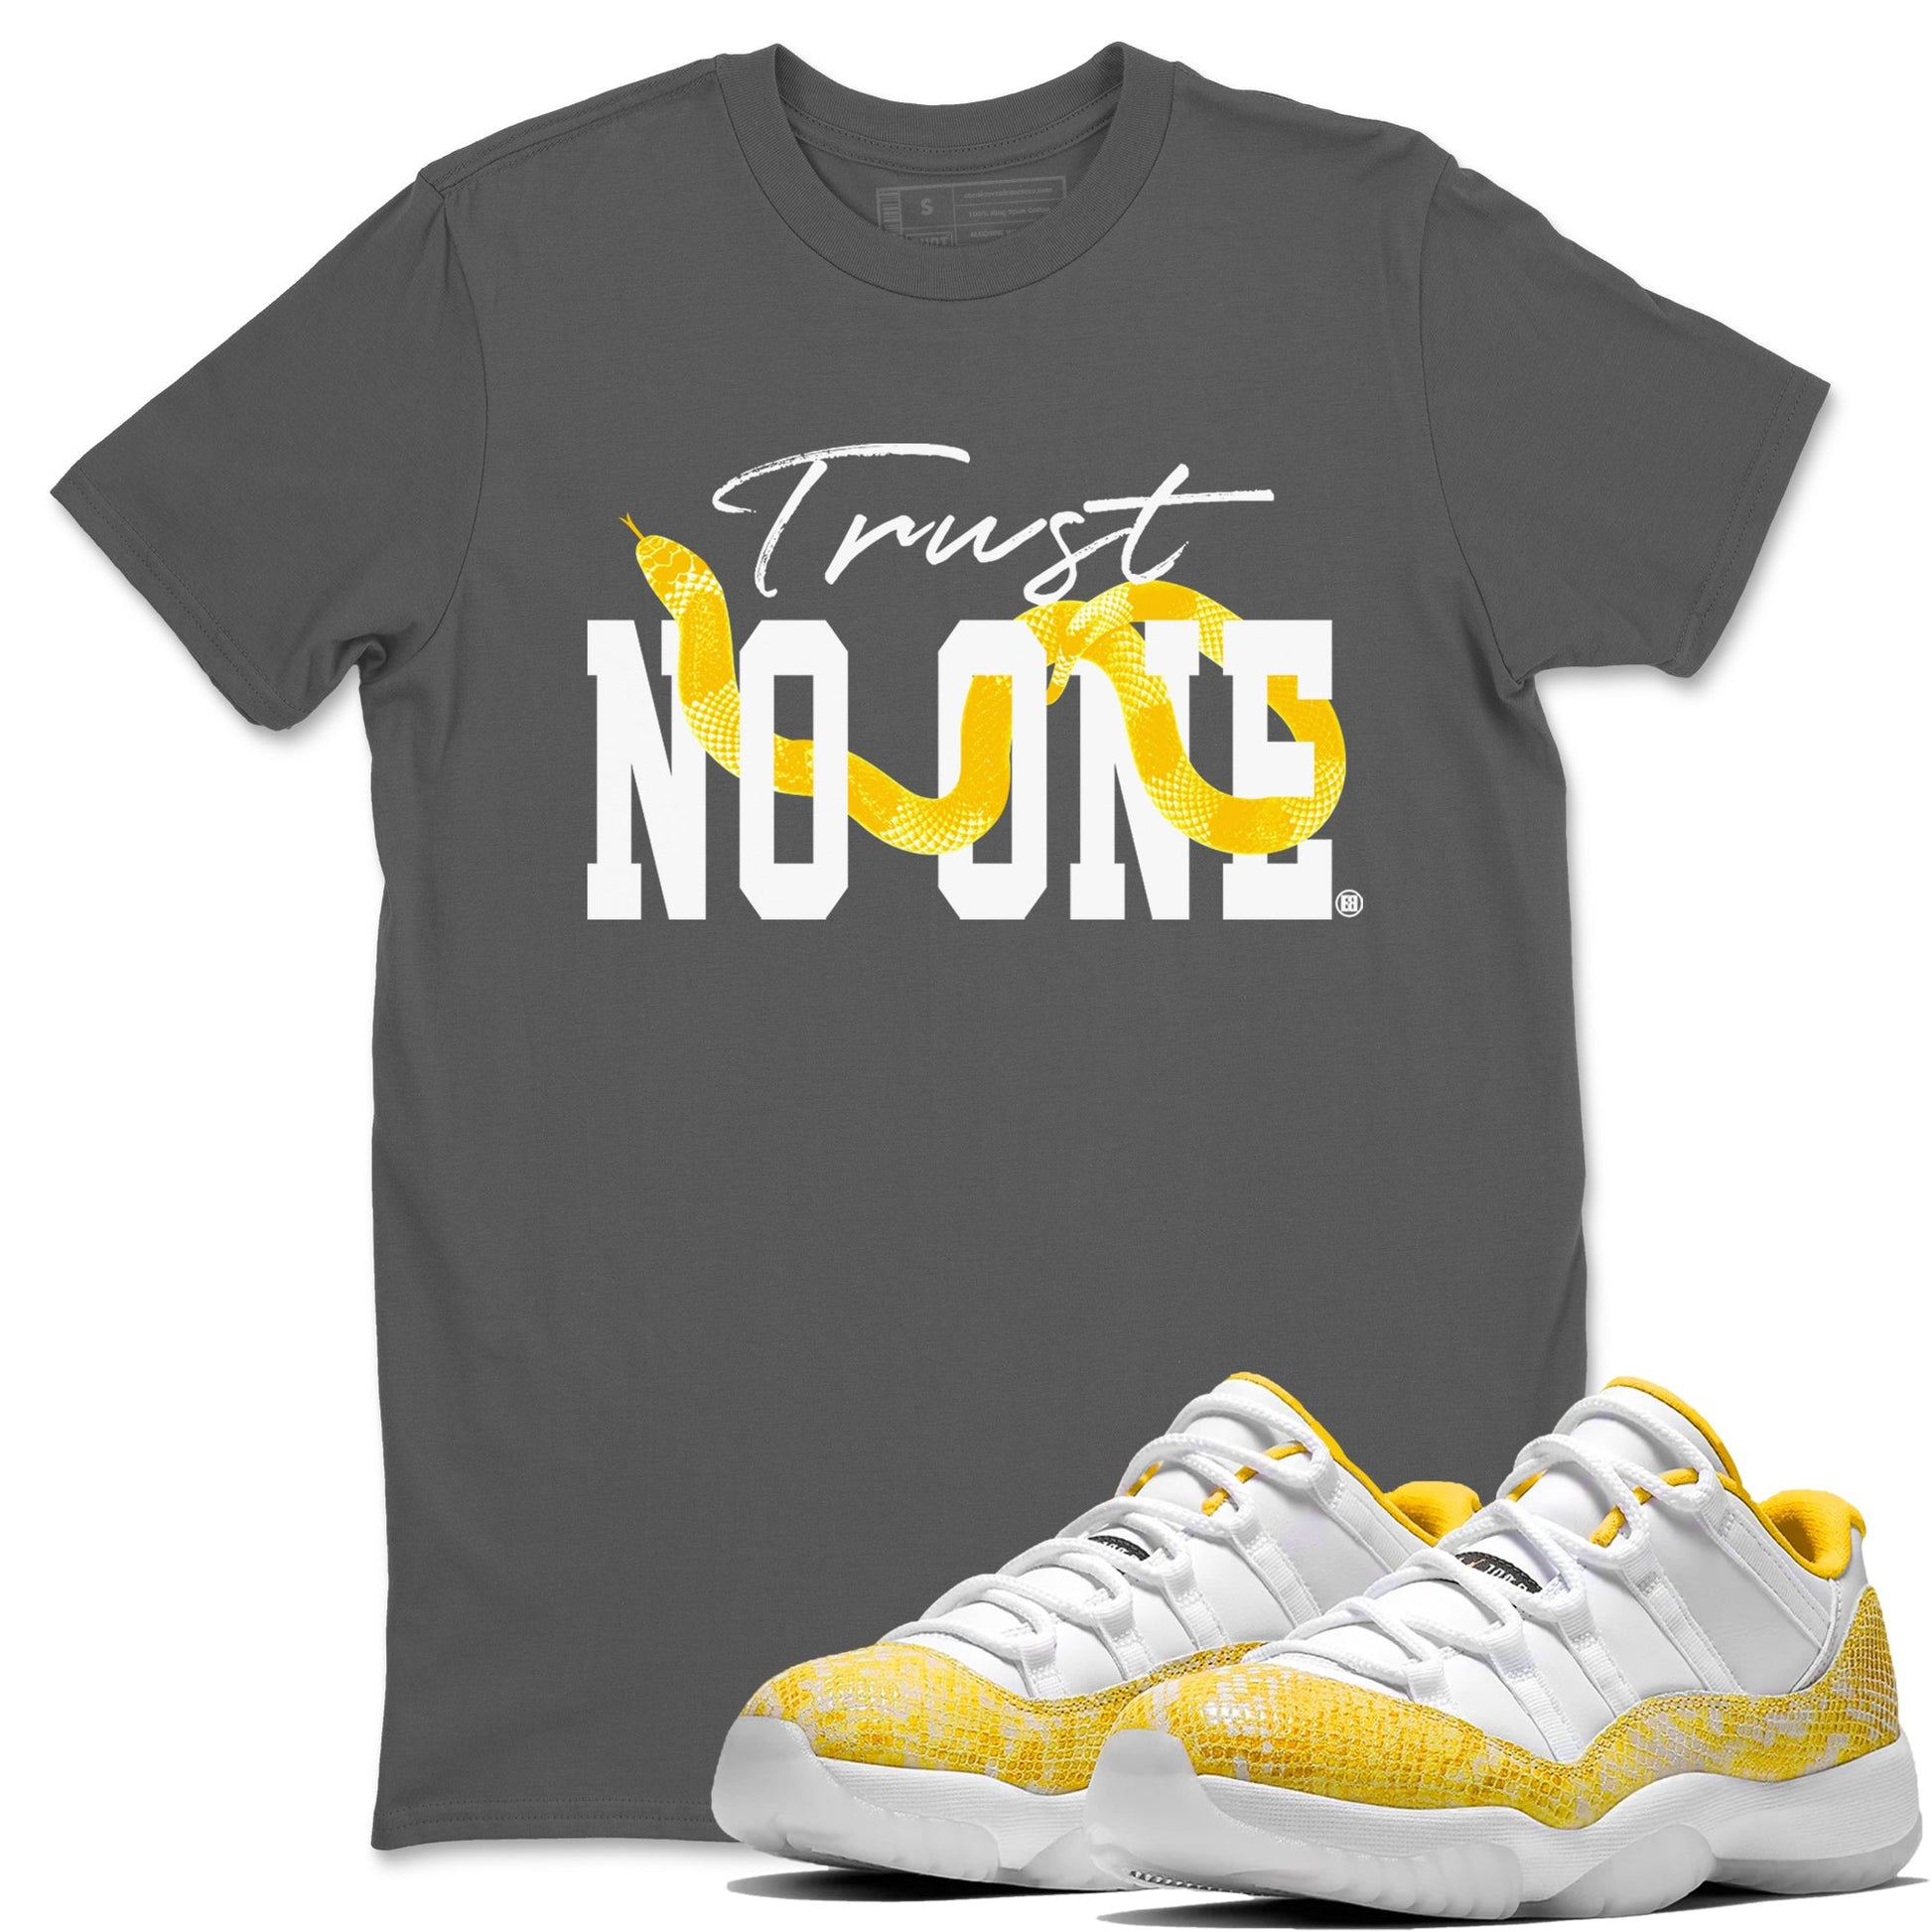 Air Jordan 11 Yellow Python Trust No One Crew Neck Sneaker Tees Air Jordan 11 Yellow Python Sneaker T-Shirts Washing and Care Tip